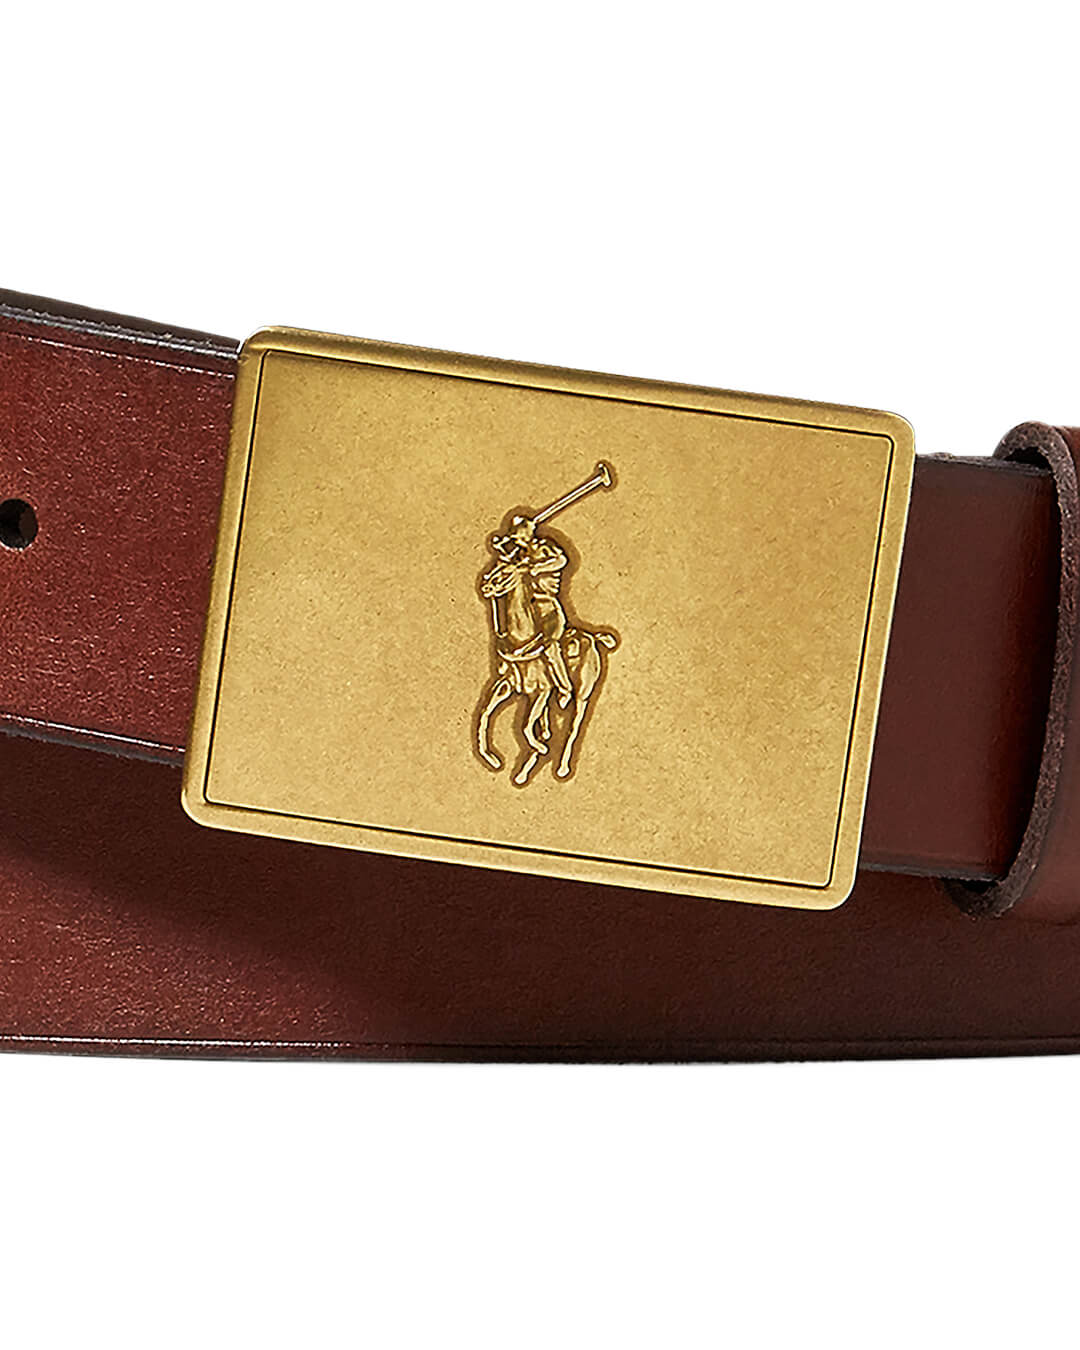 Polo Ralph Lauren Belts Polo Ralph Lauren Pony Plaque Brown Leather Belt